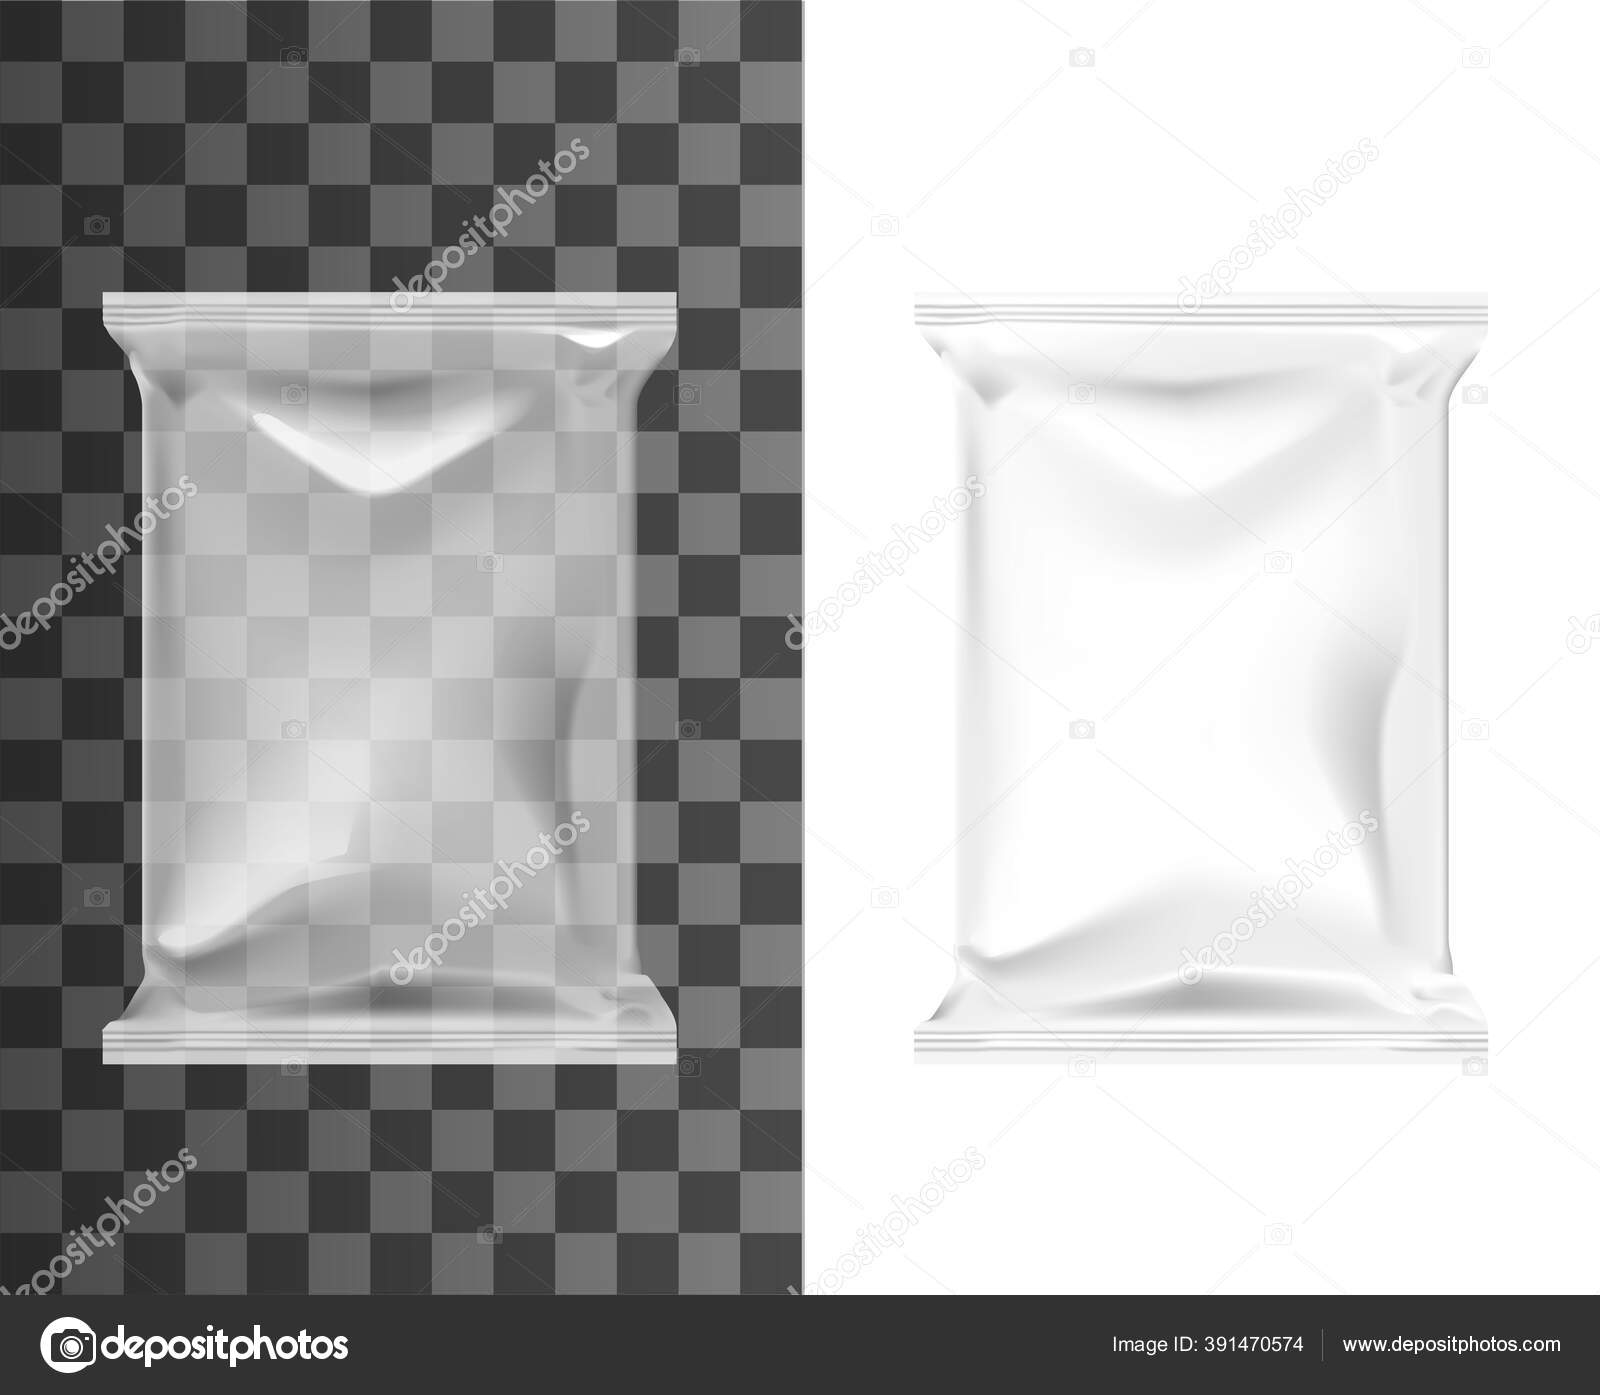 Plastic packaging transparent packs food Vector Image